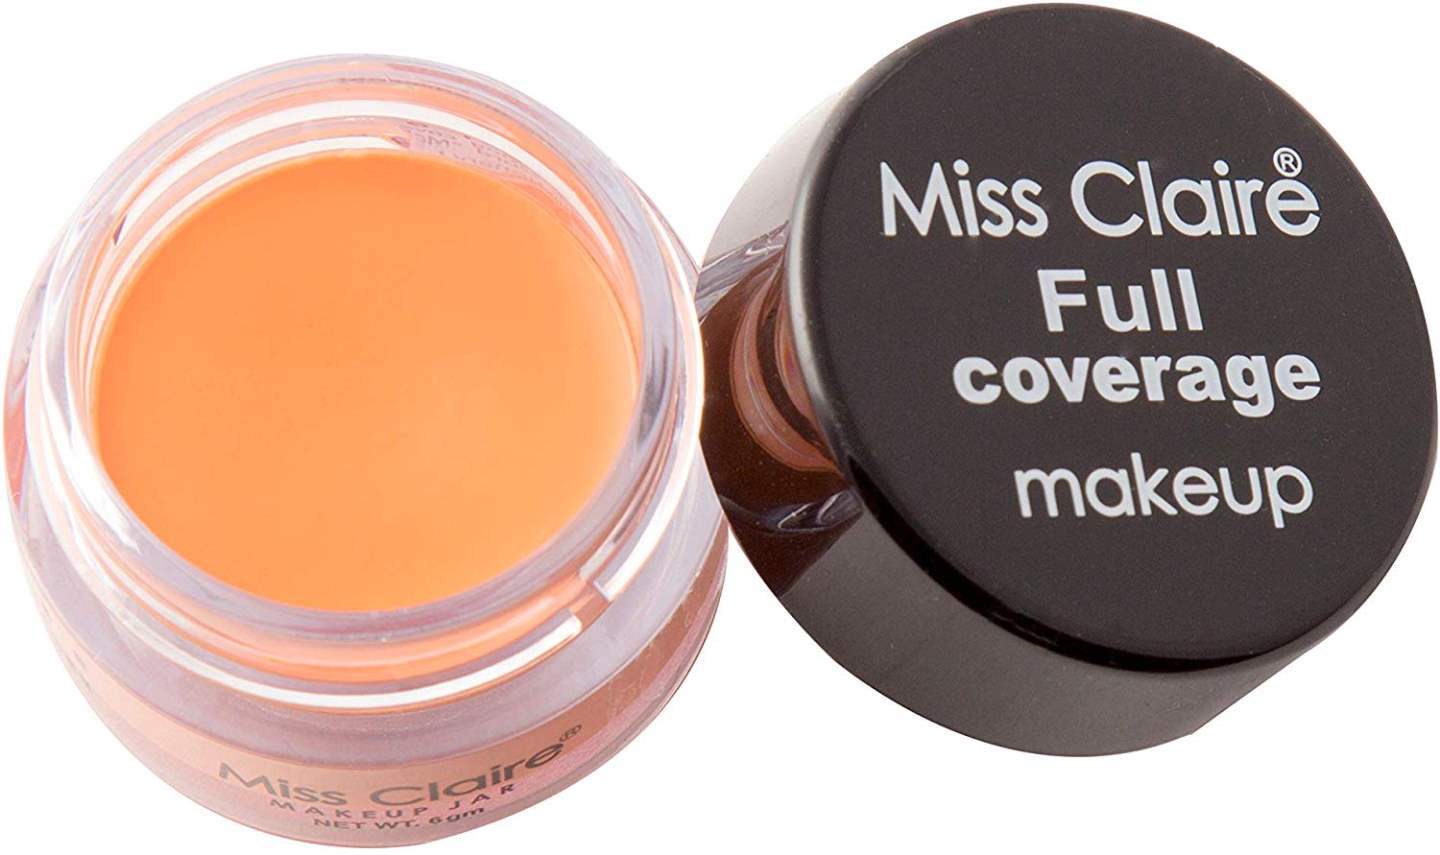 Miss Claire Full Coverage Makeup + Concealer #11, Orange - 6 g